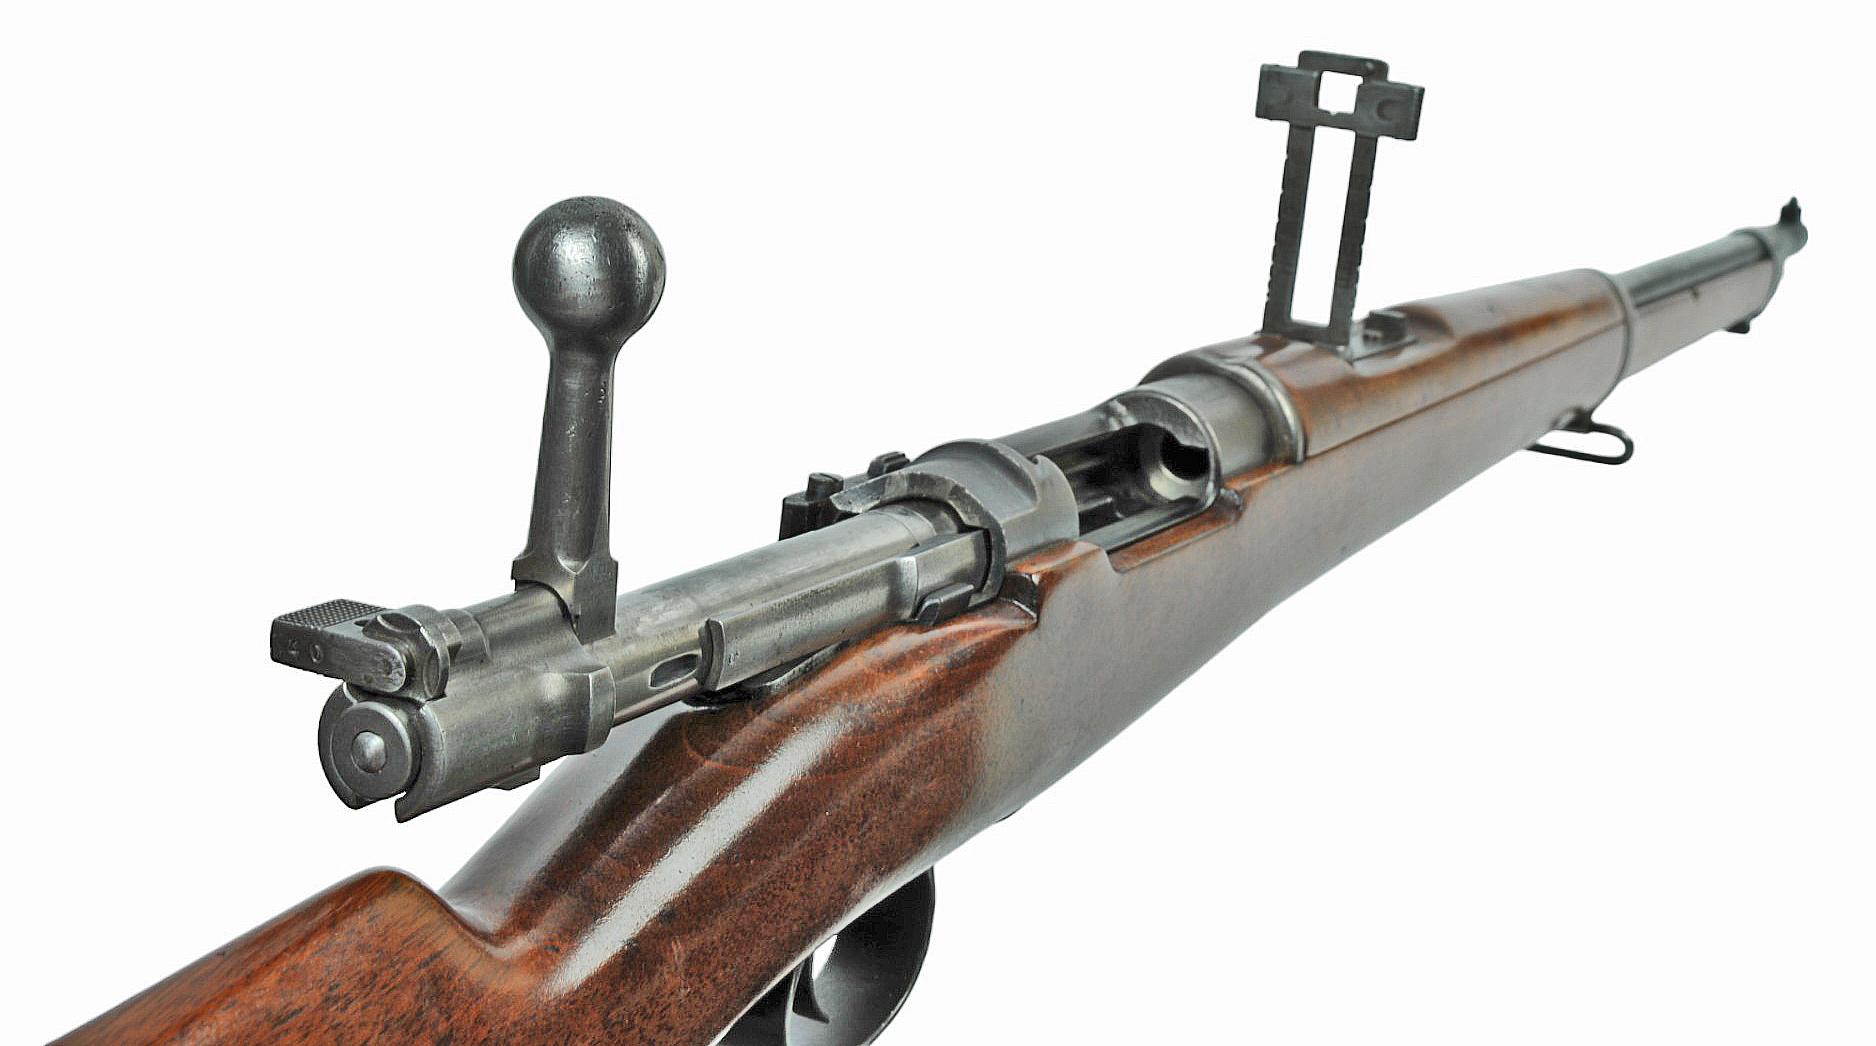 Chilean Military M1895 7x57mm Mauser Bolt-Action Rifle - Antique - no FFL needed (VDM1)